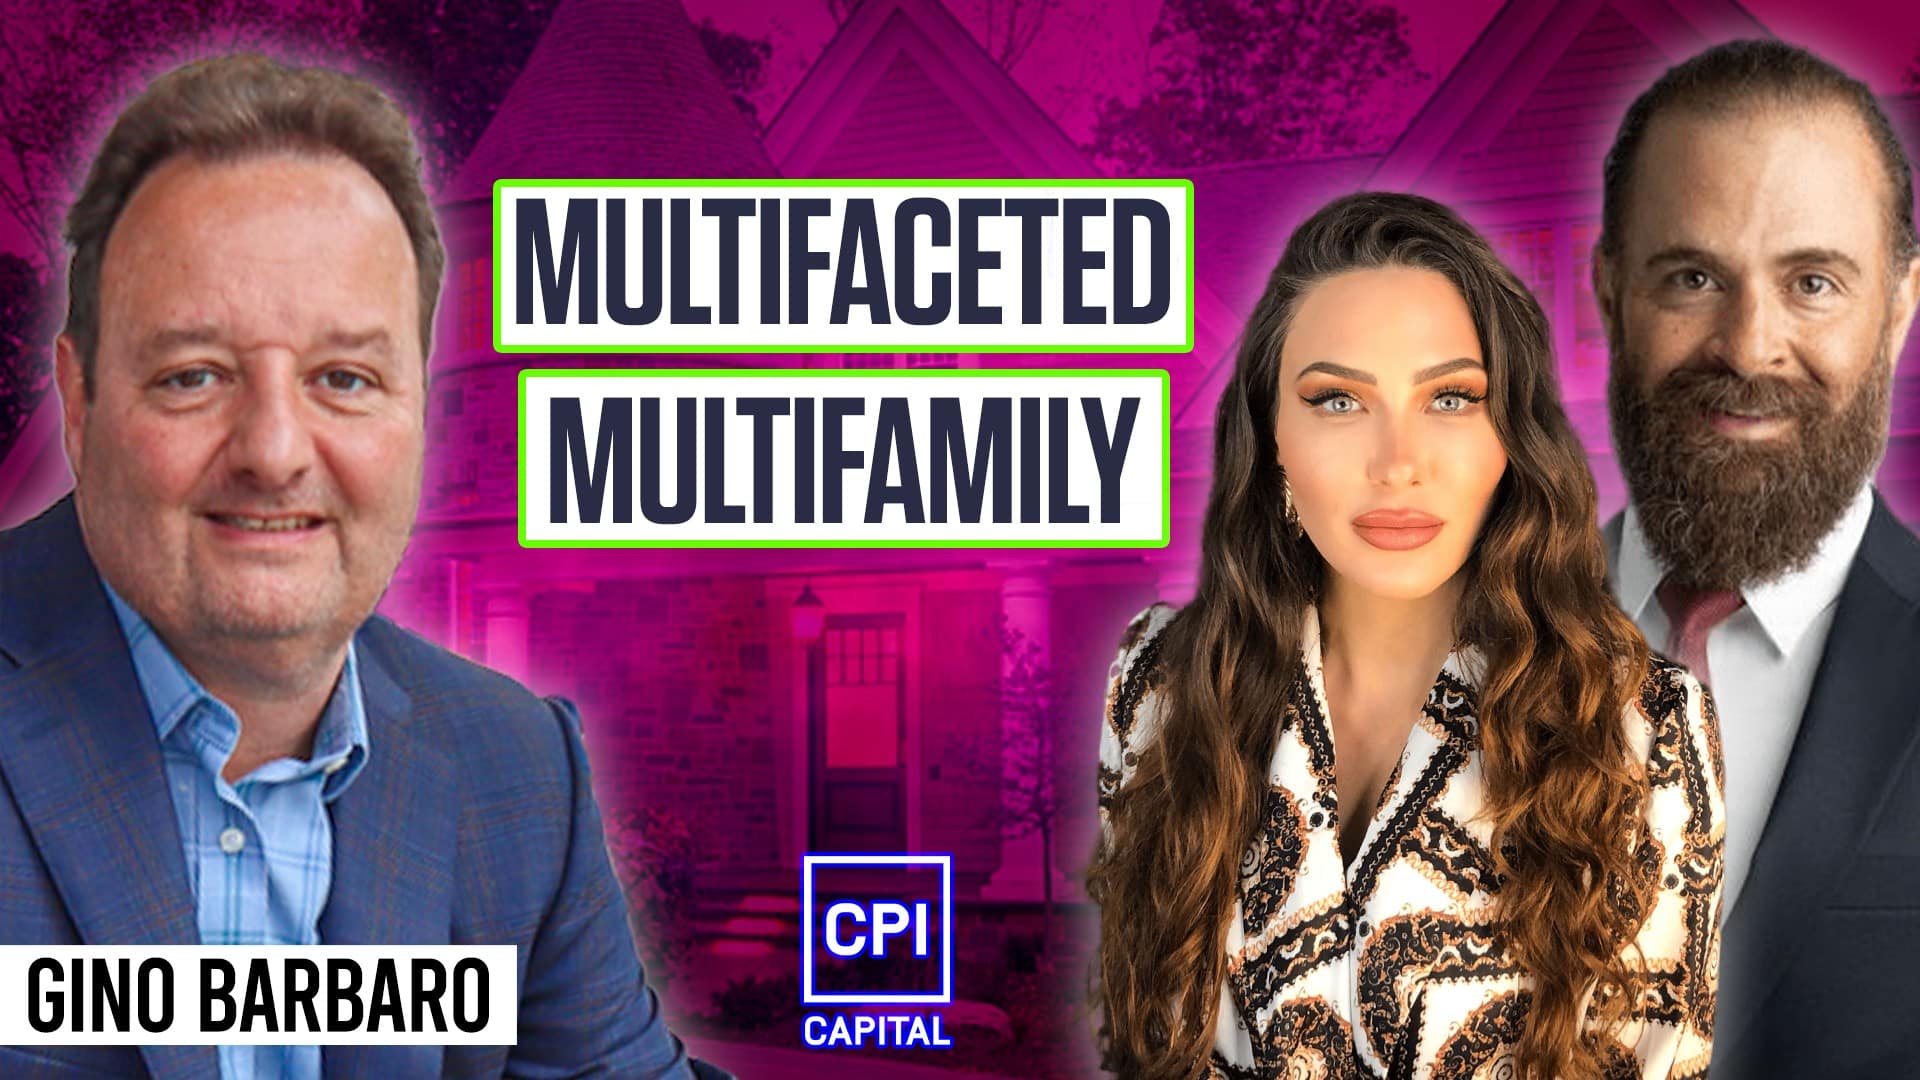 REID Gino Barbaro | Multifamily Real Estate